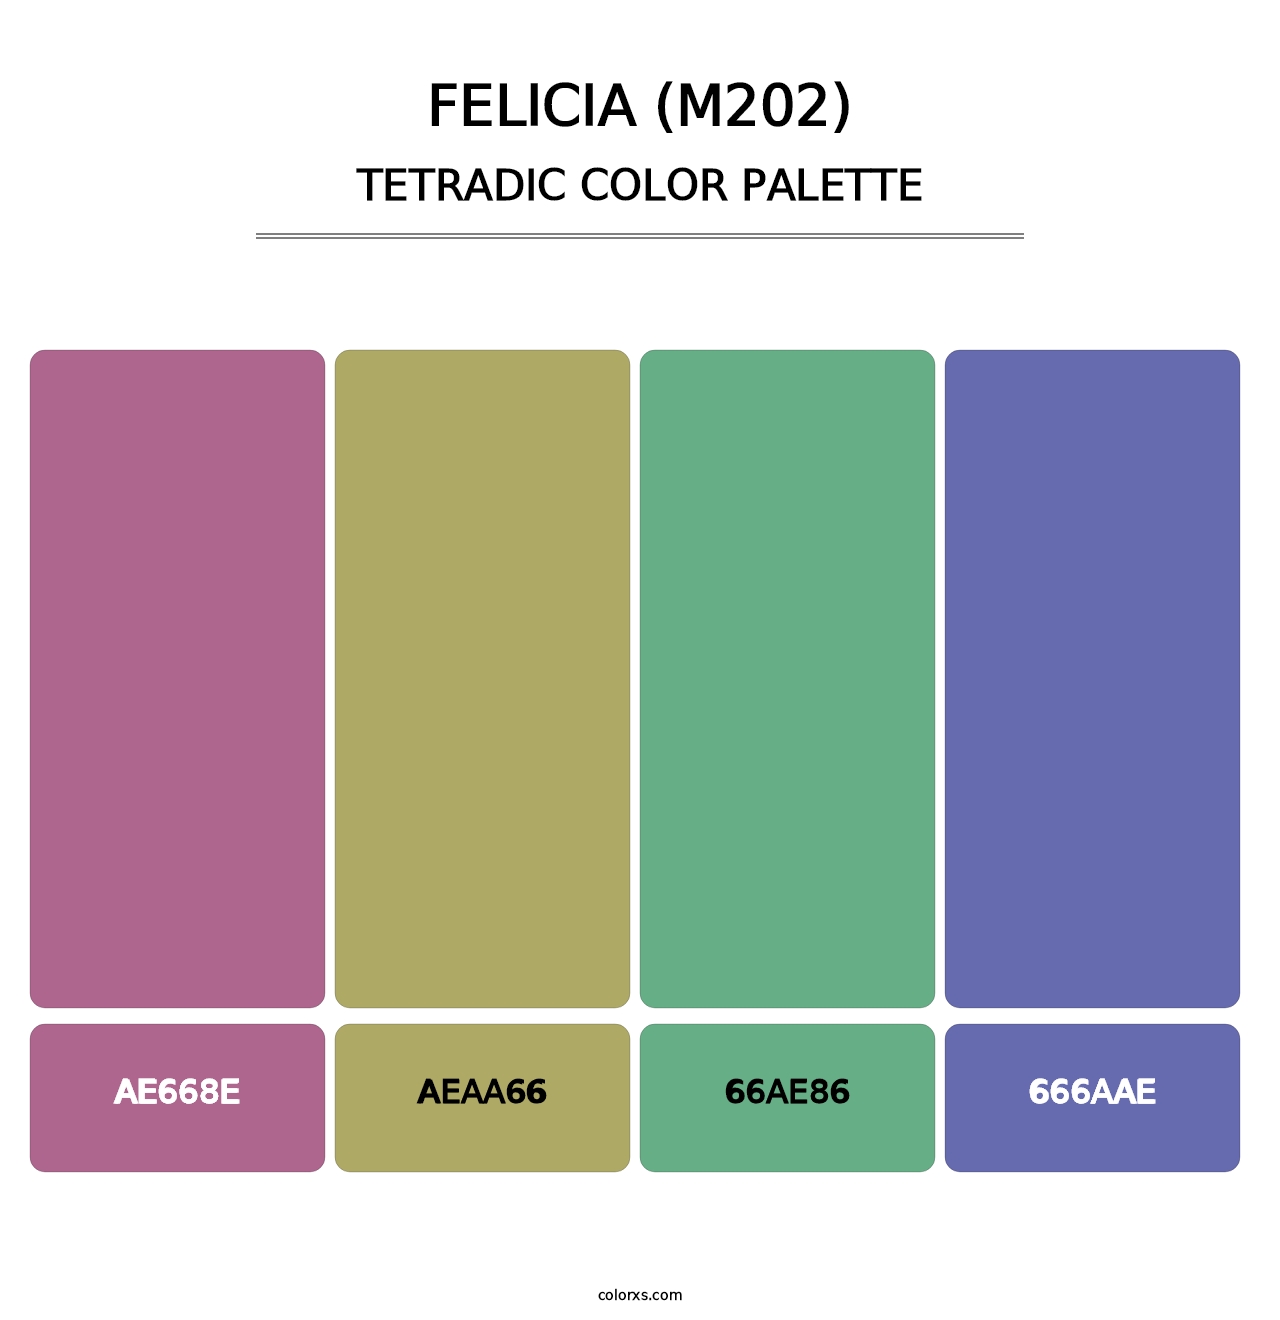 Felicia (M202) - Tetradic Color Palette